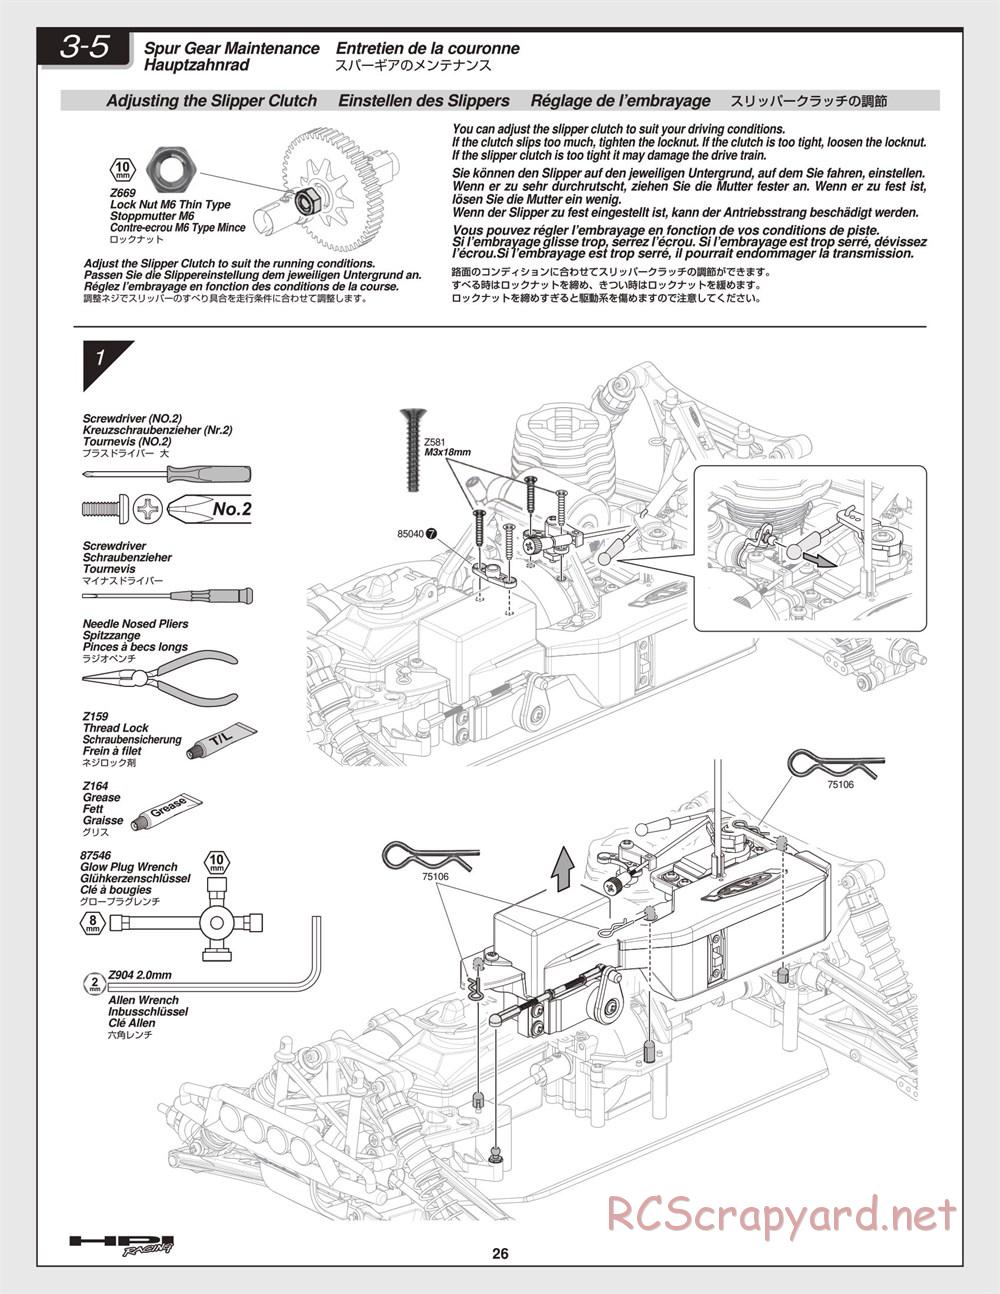 HPI - Nitro MT2 G3.0 - Manual - Page 26